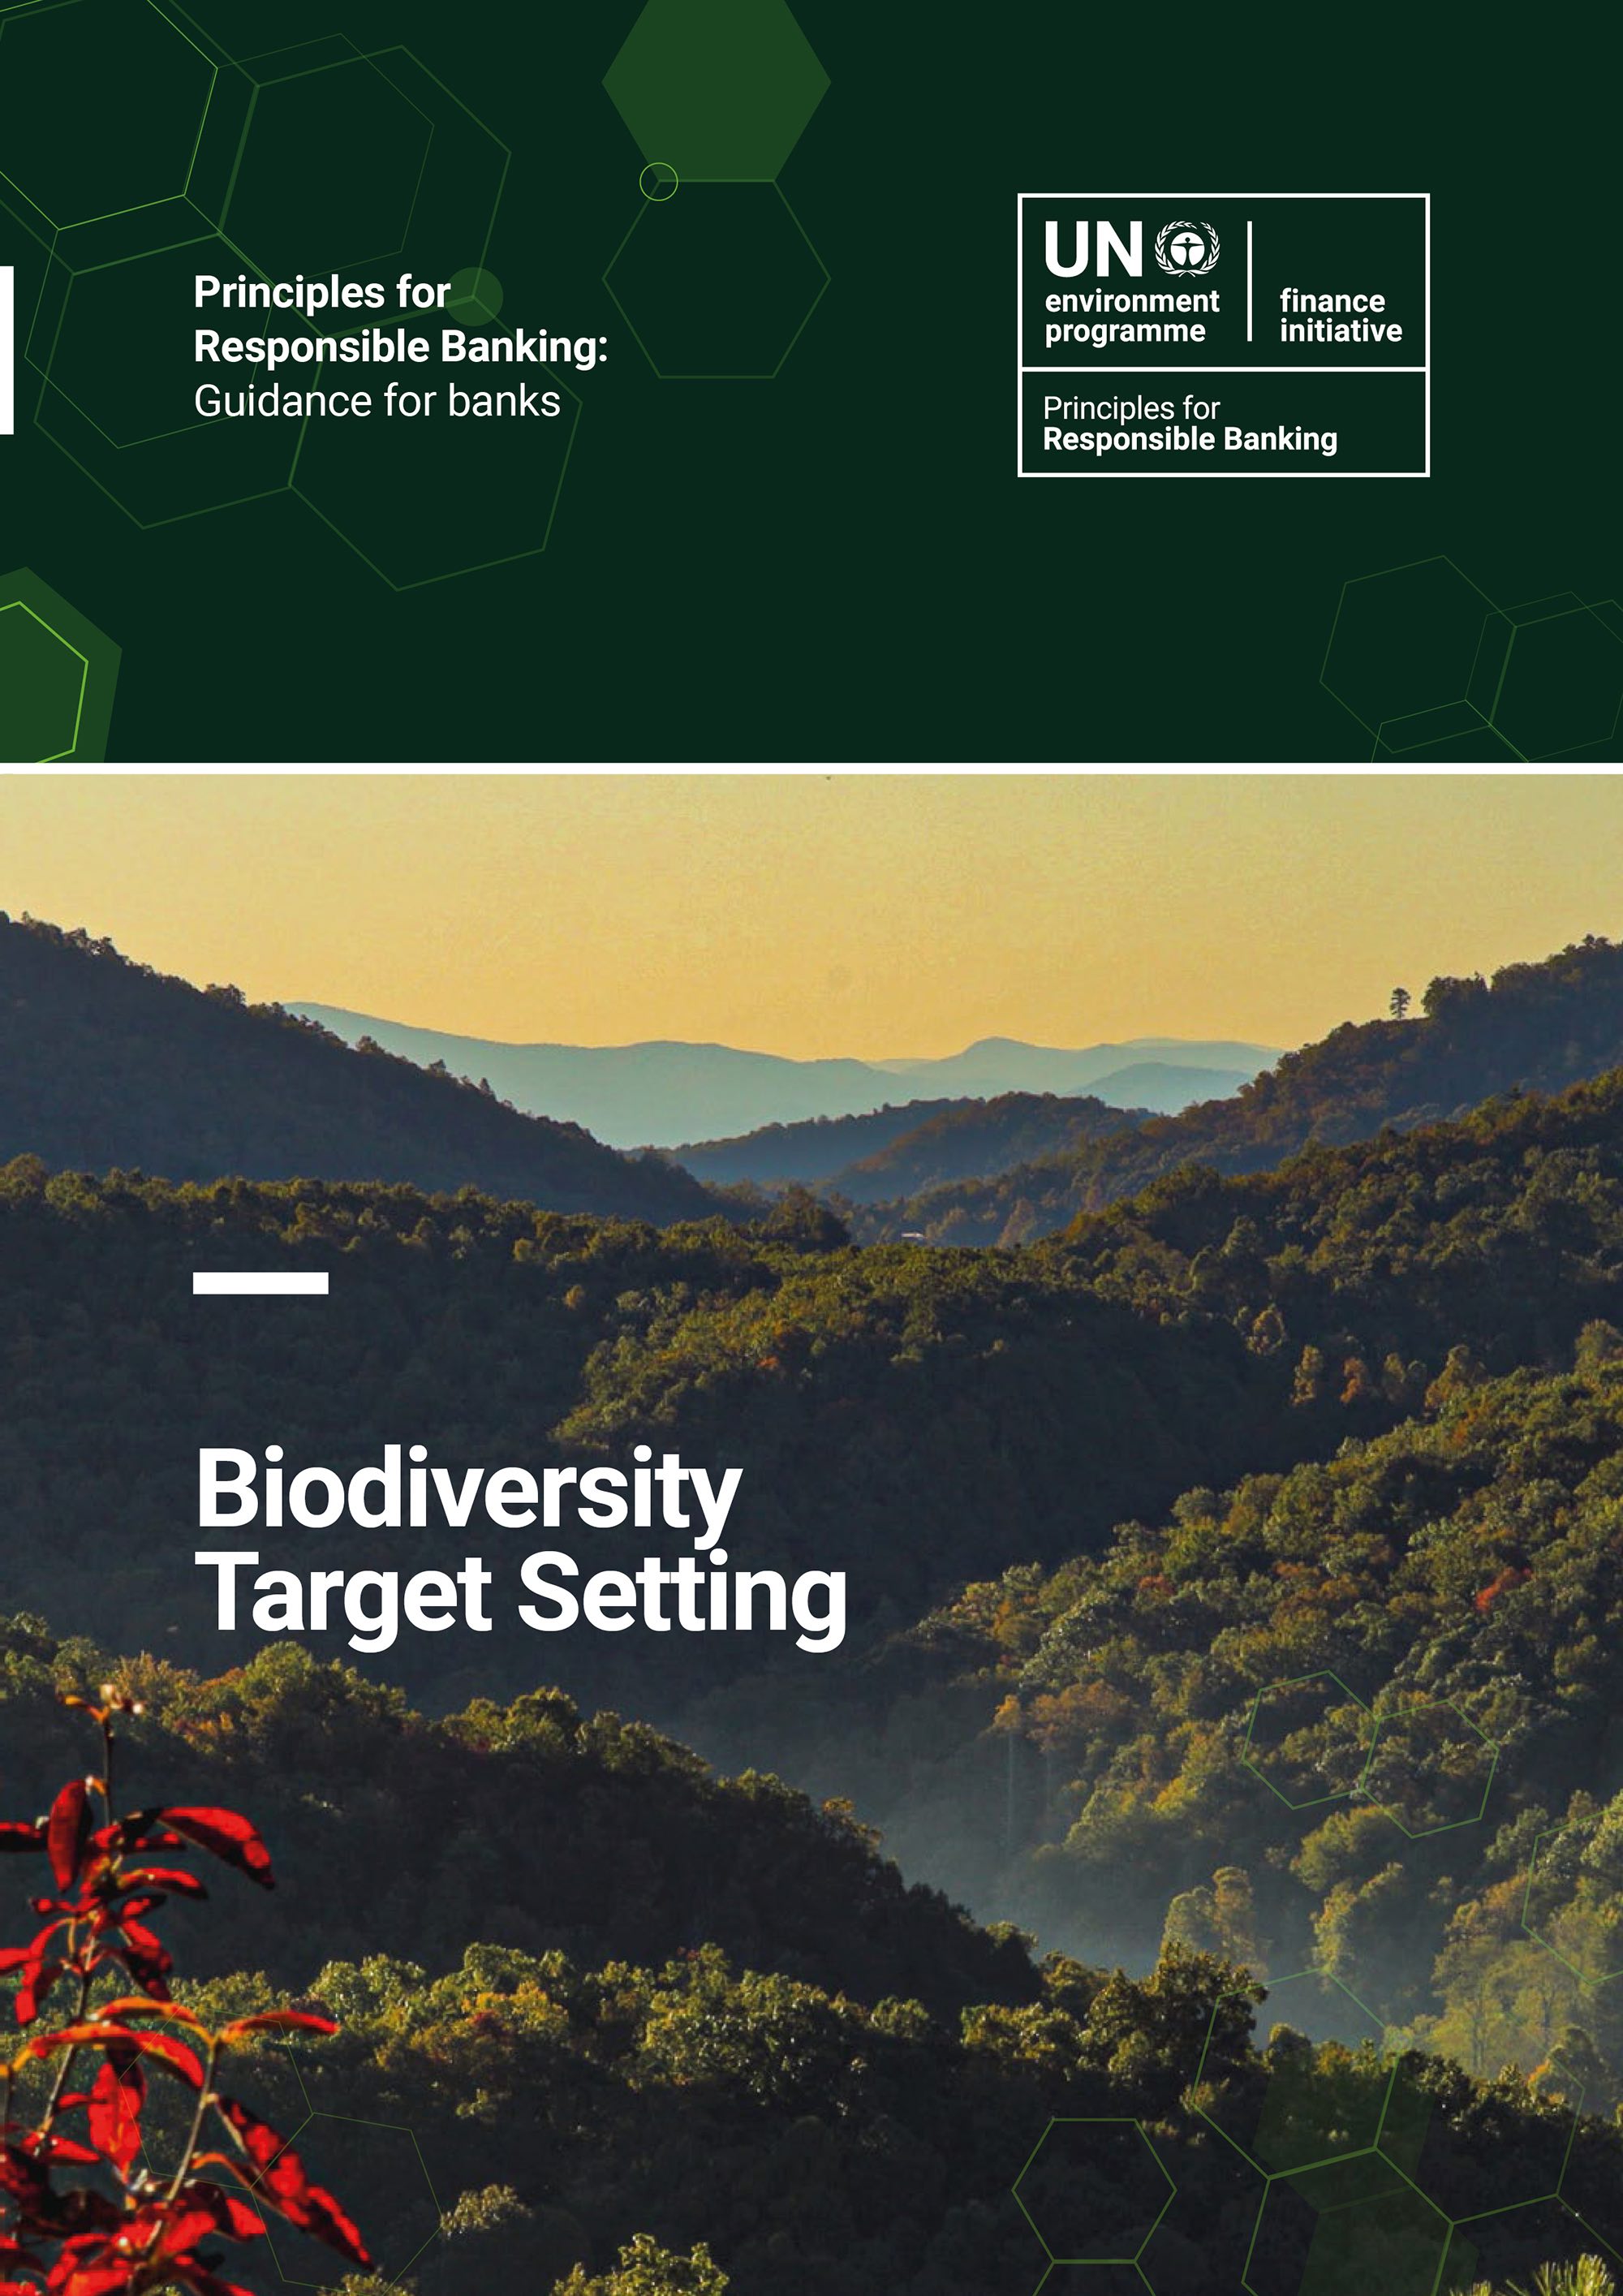 Guidance on Biodiversity Target-setting